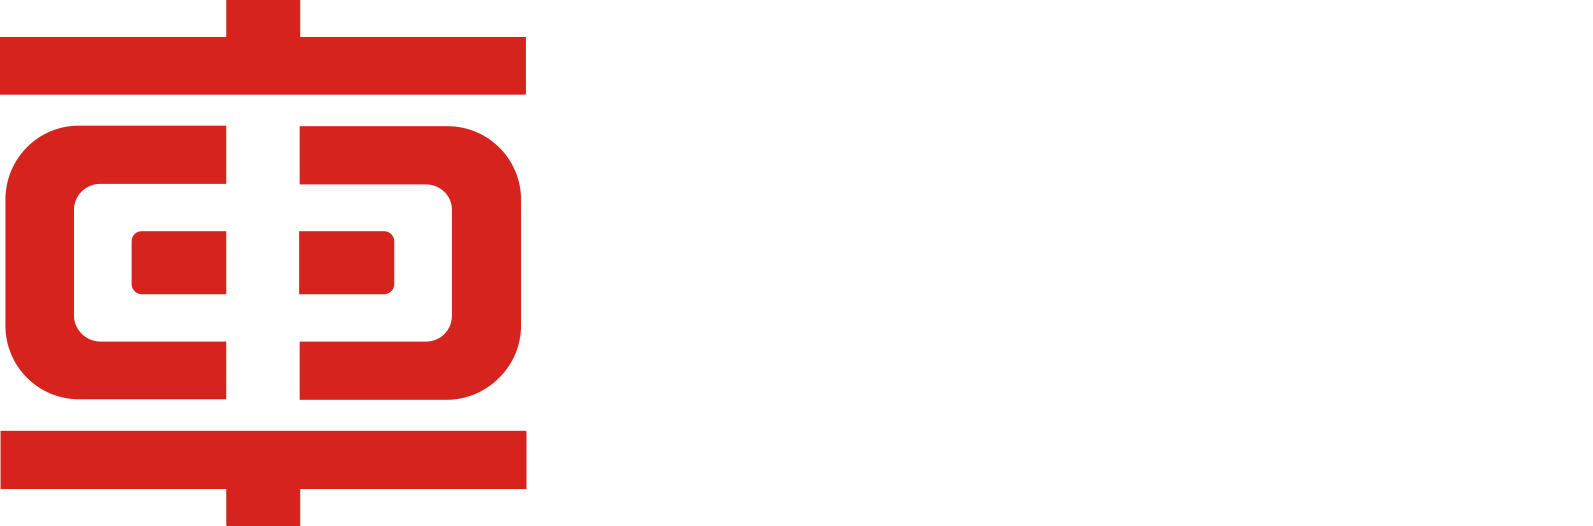 Zhuzhou CRRC Times Electric Logo groß für dunkle Hintergründe (transparentes PNG)